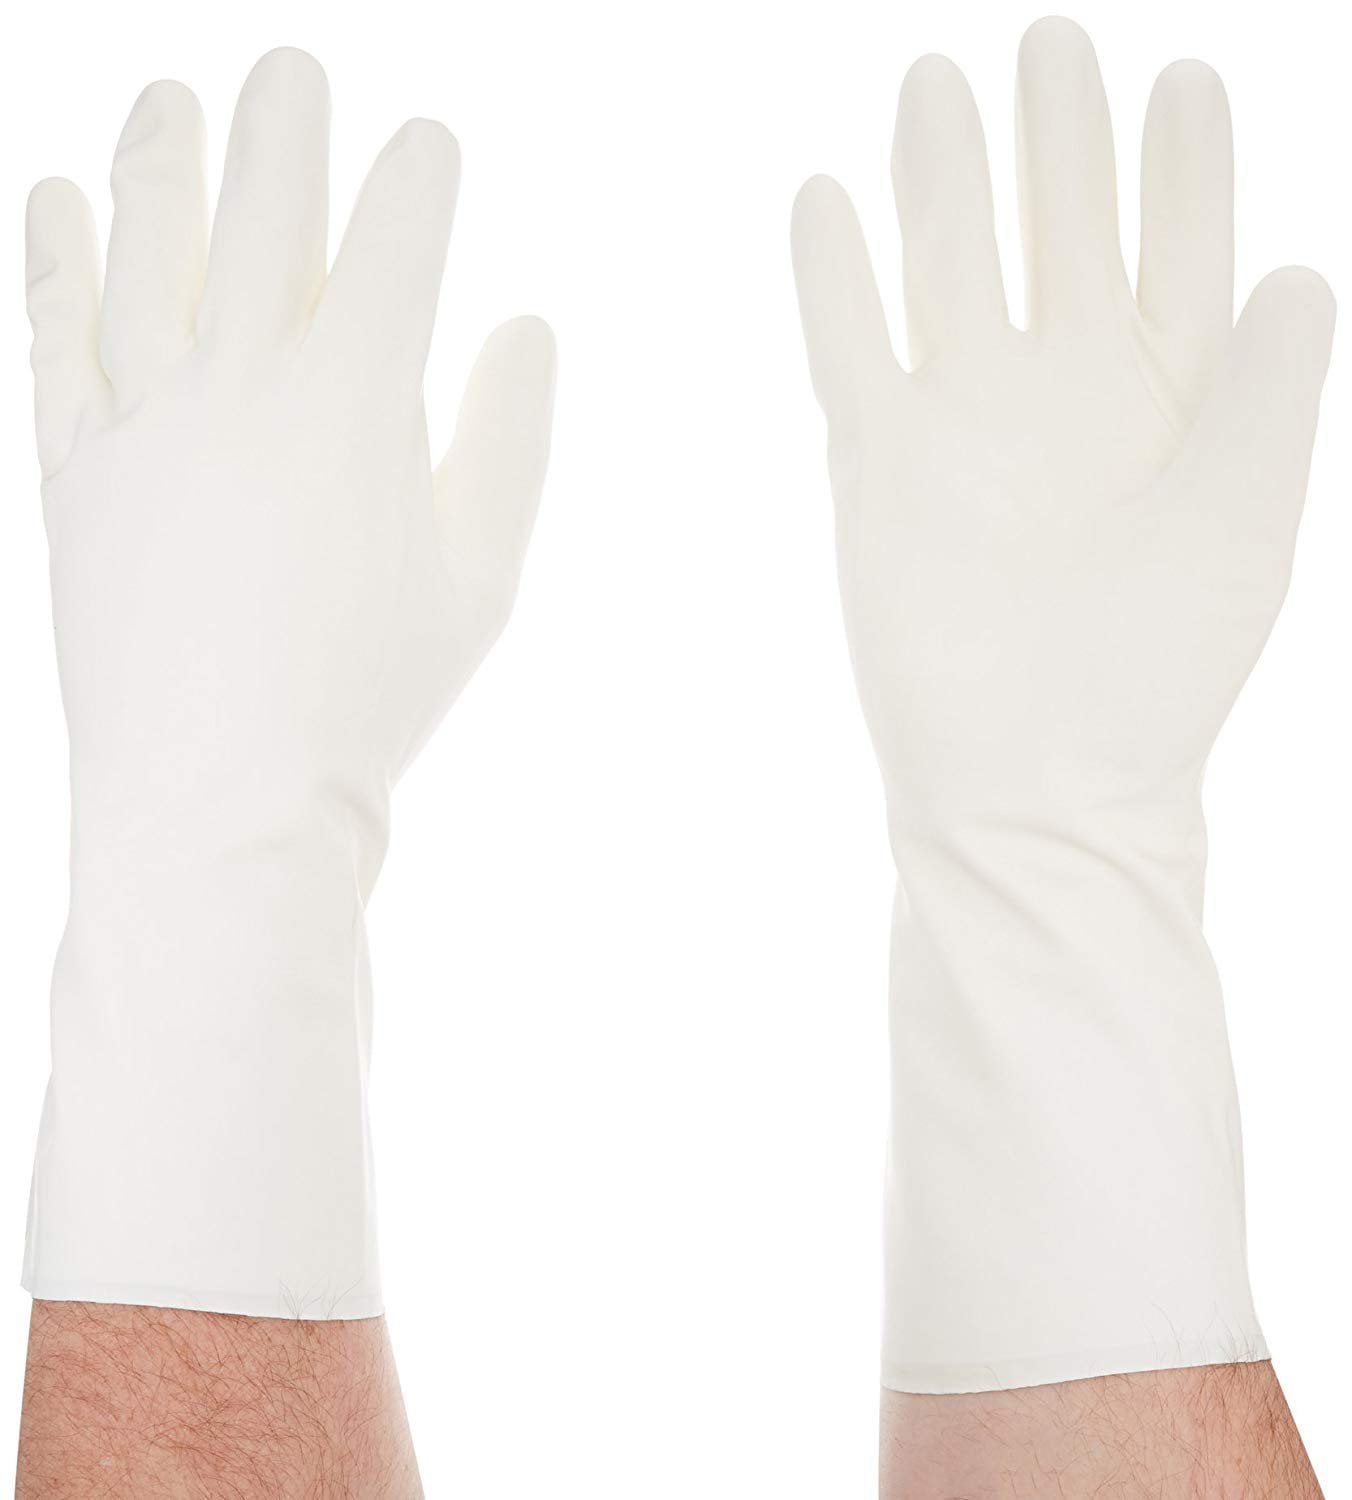 Matfer 262290 Sugar Work Gloves Medium